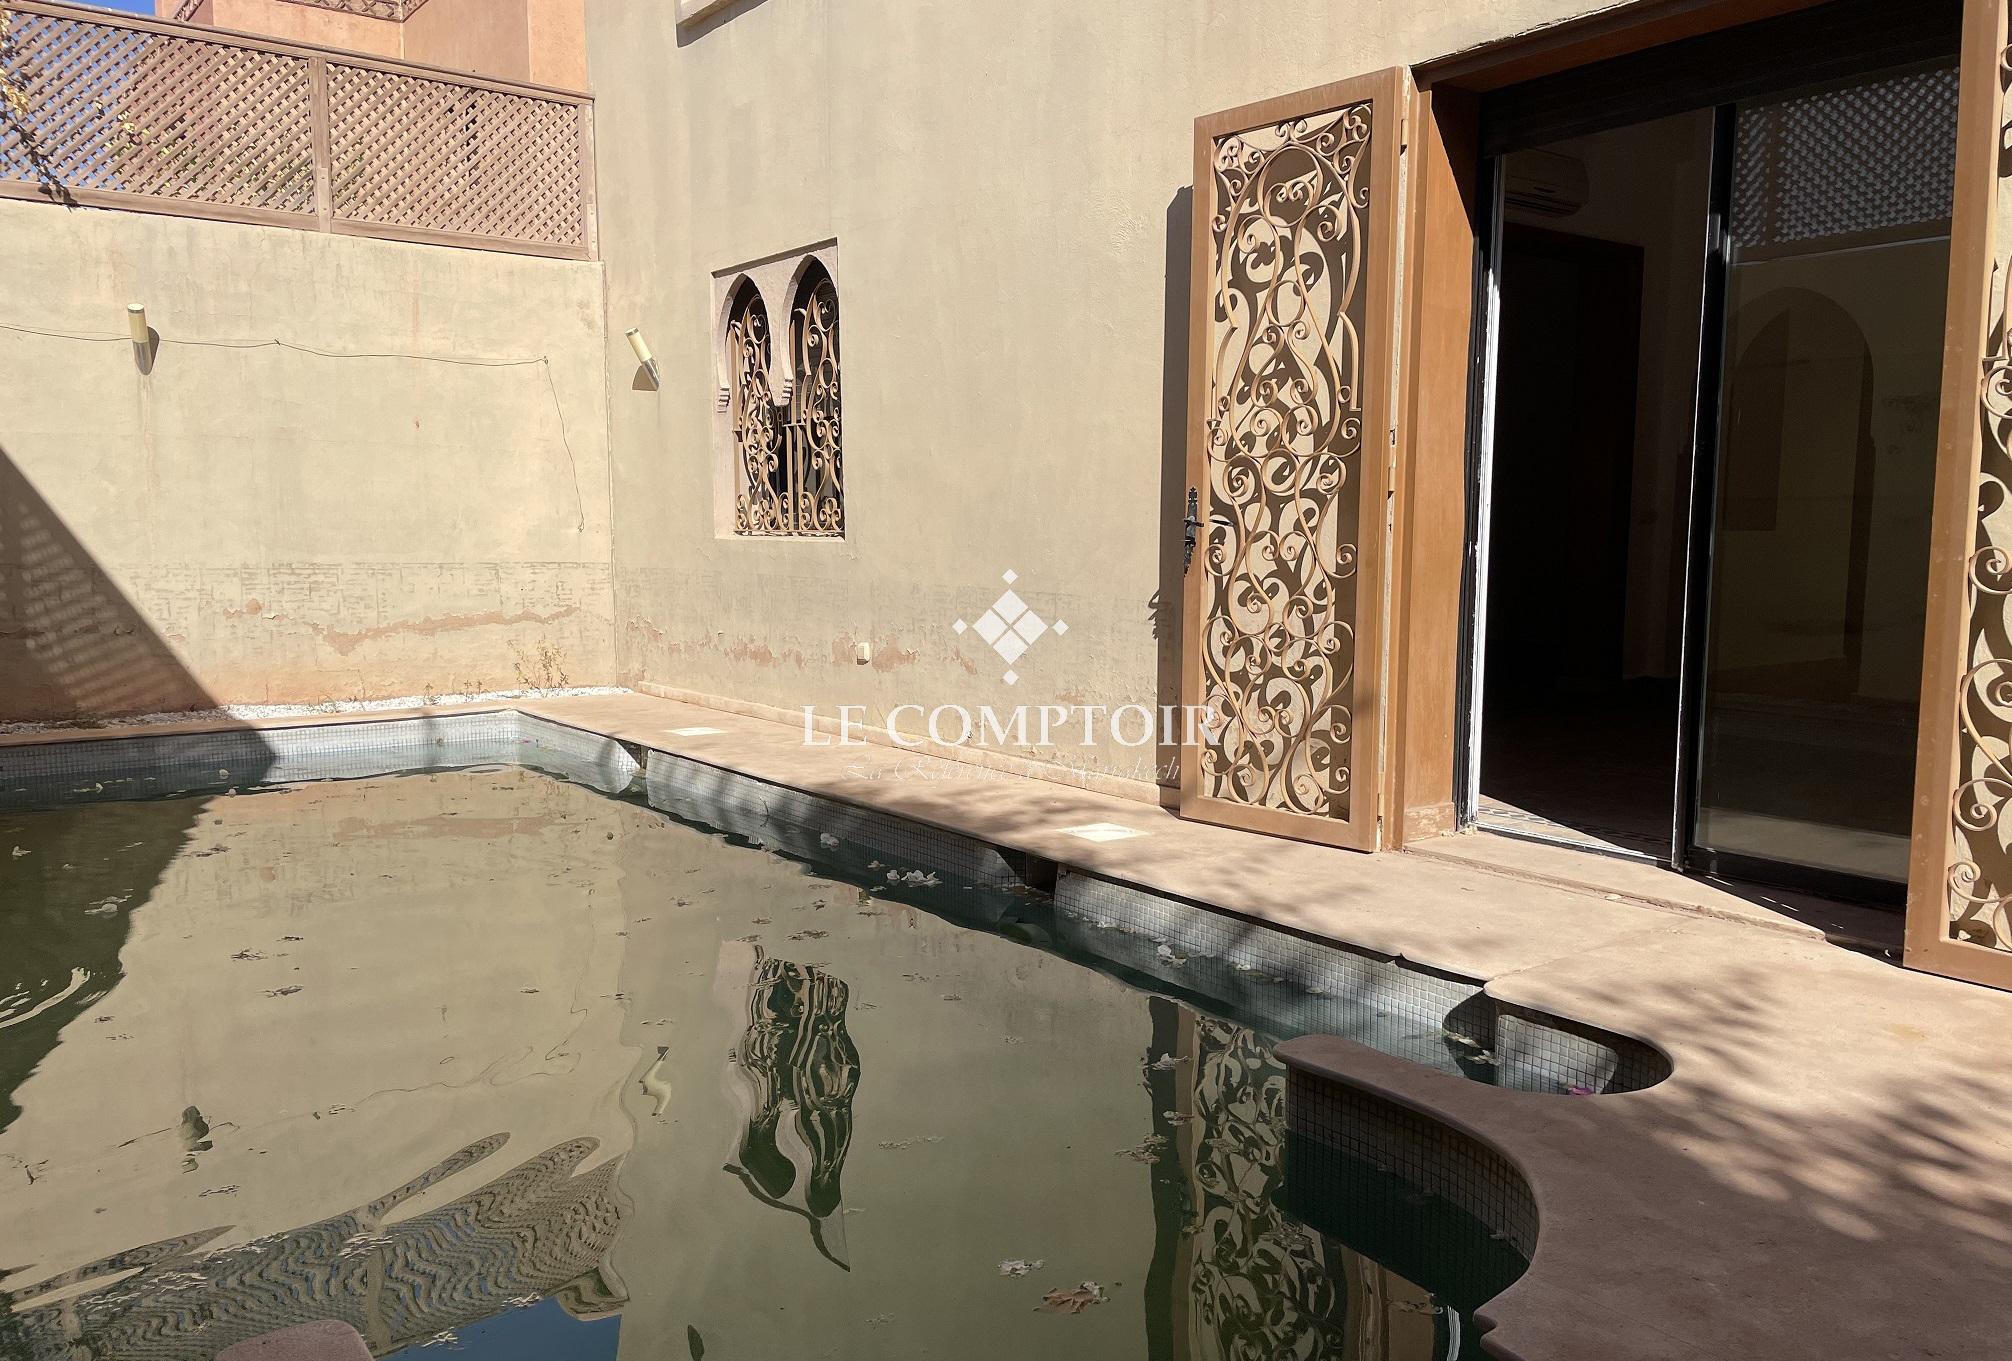 Le Comptoir Immobilier Agence Immobiliere Marrakech Villa Residence Non Meublee Location Marakech Maroc Piscine 3 2